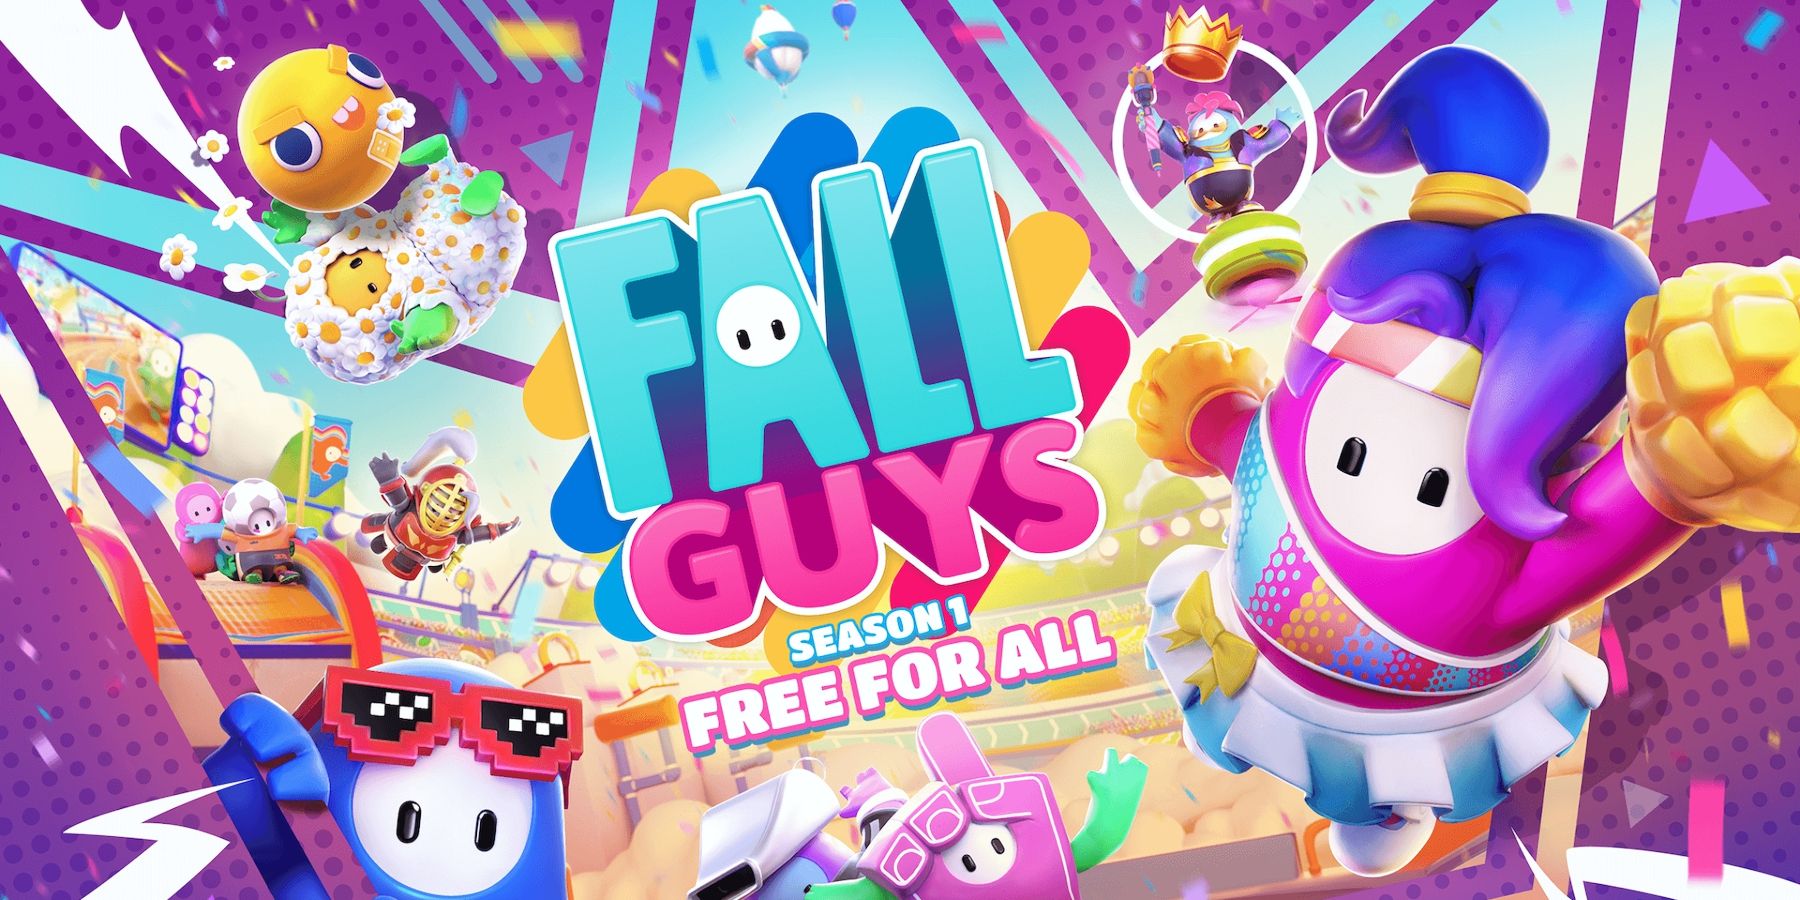 fall guys season 1 free for all